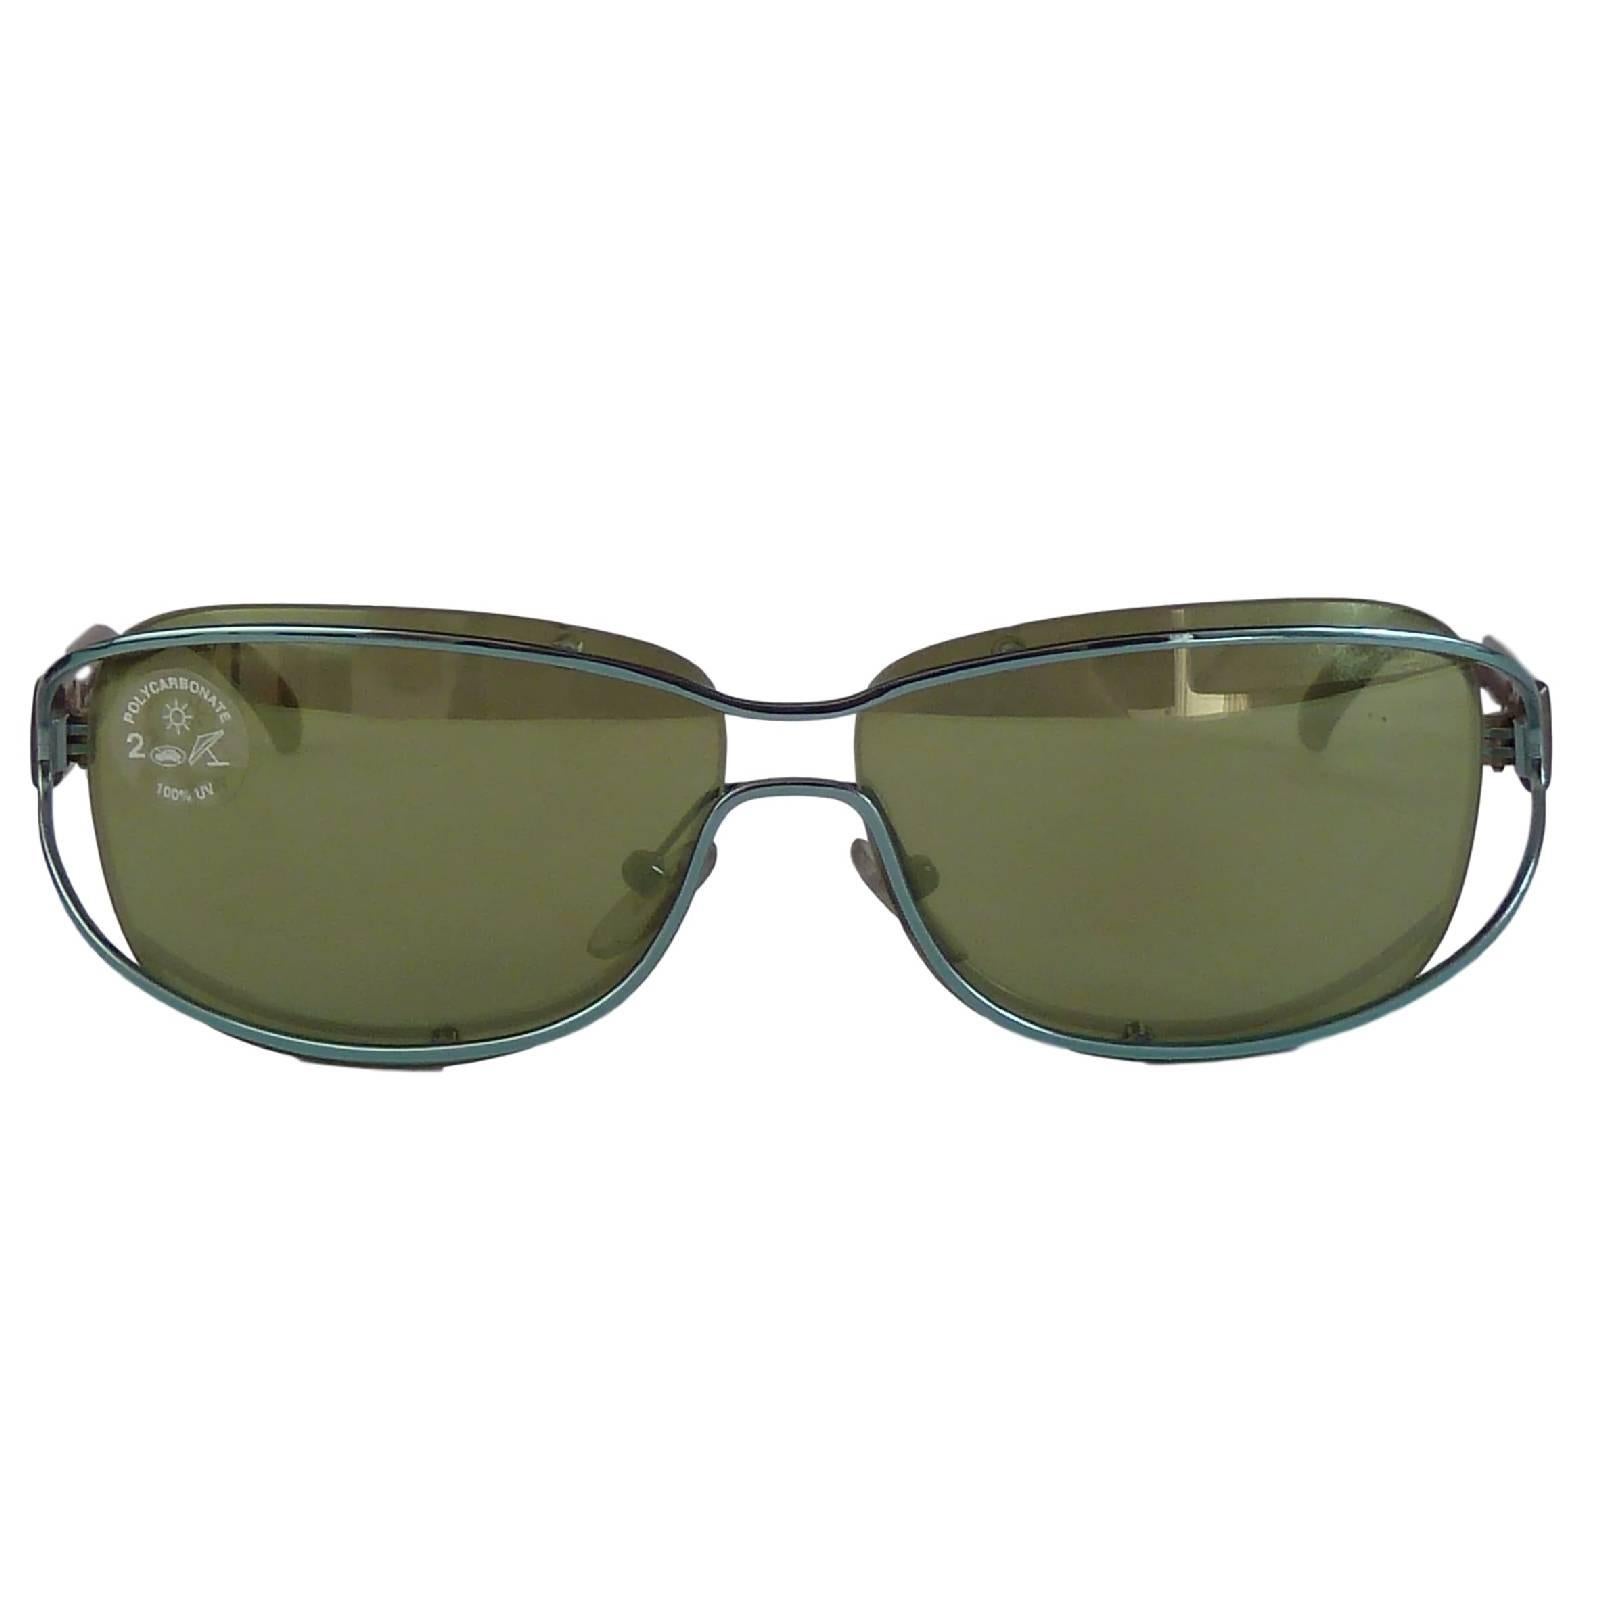 Women's Nina Ricci vintage sunglasses NR 3477 green brown polycarbonate 1980s women’s For Sale